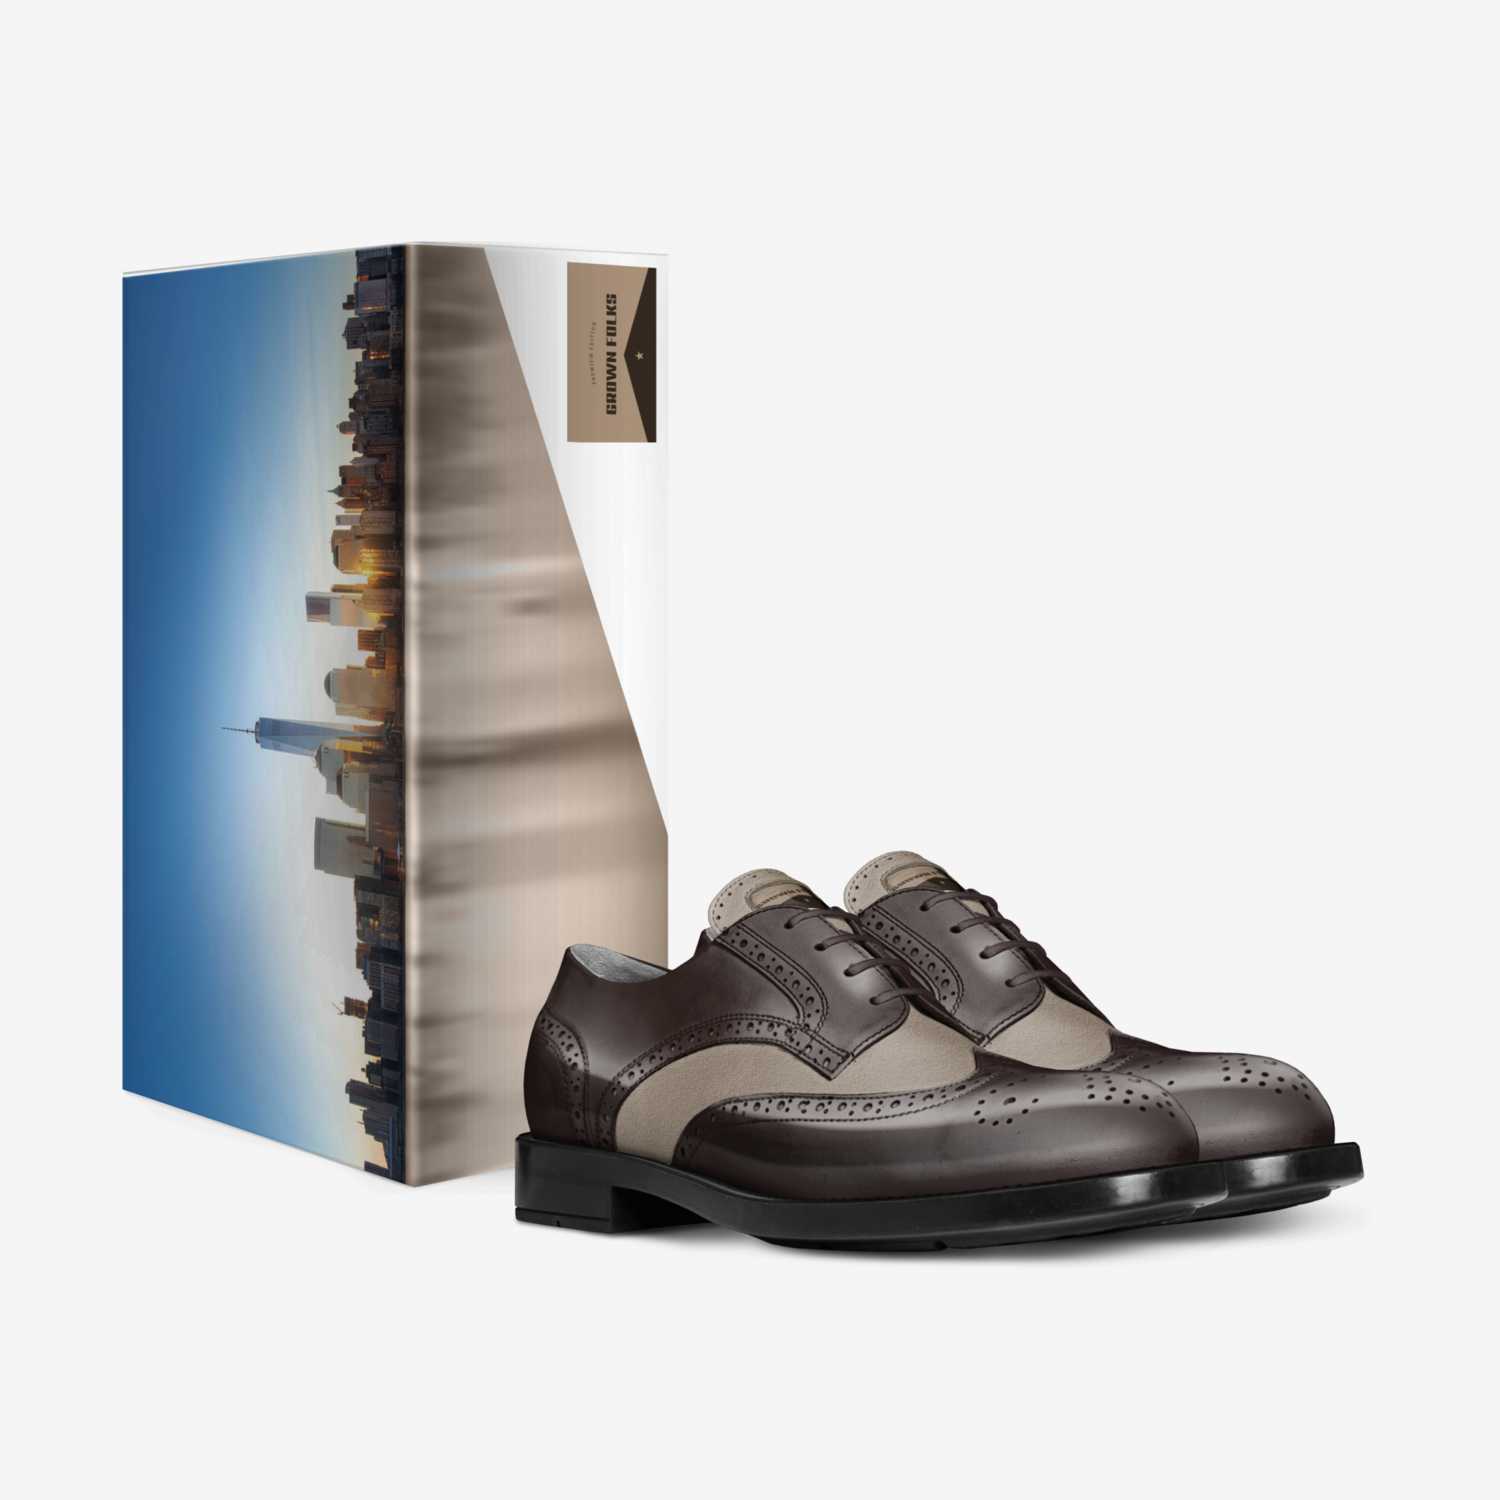 GROWN FOLKS custom made in Italy shoes by Moffatt Gordon | Box view